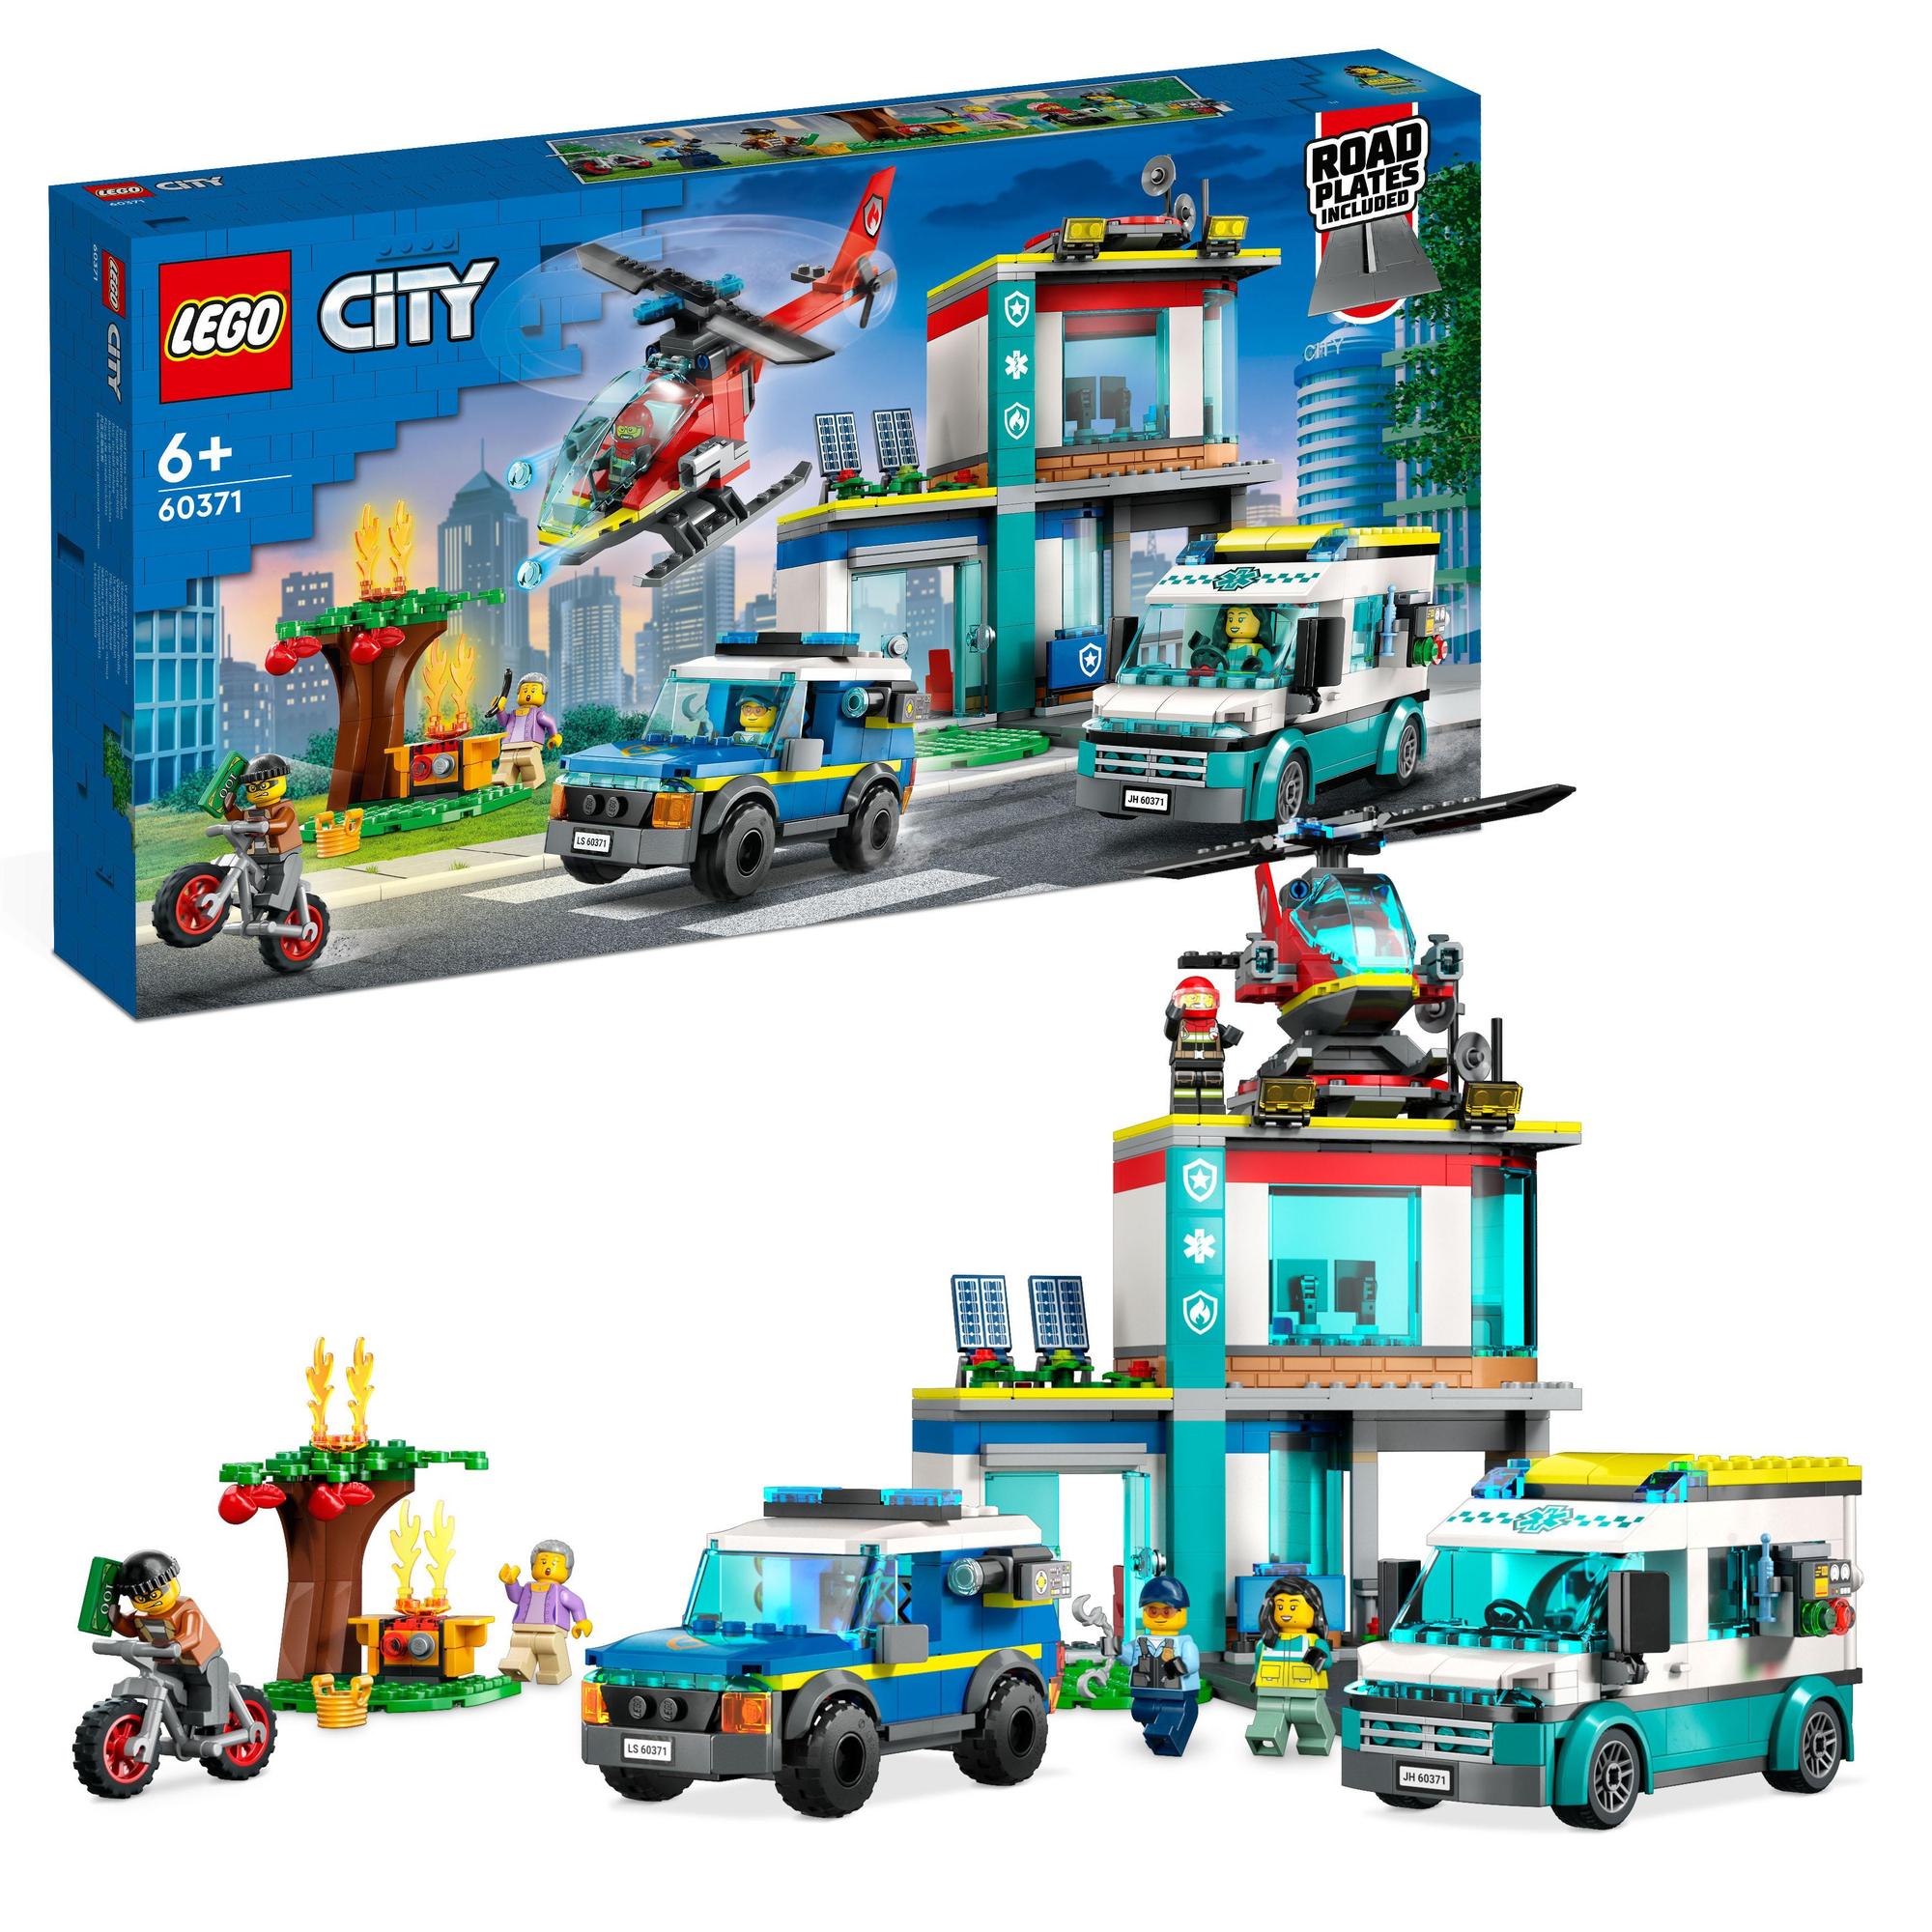 LEGO® | 60371 | Hauptquartier der Rettungsfahrzeuge